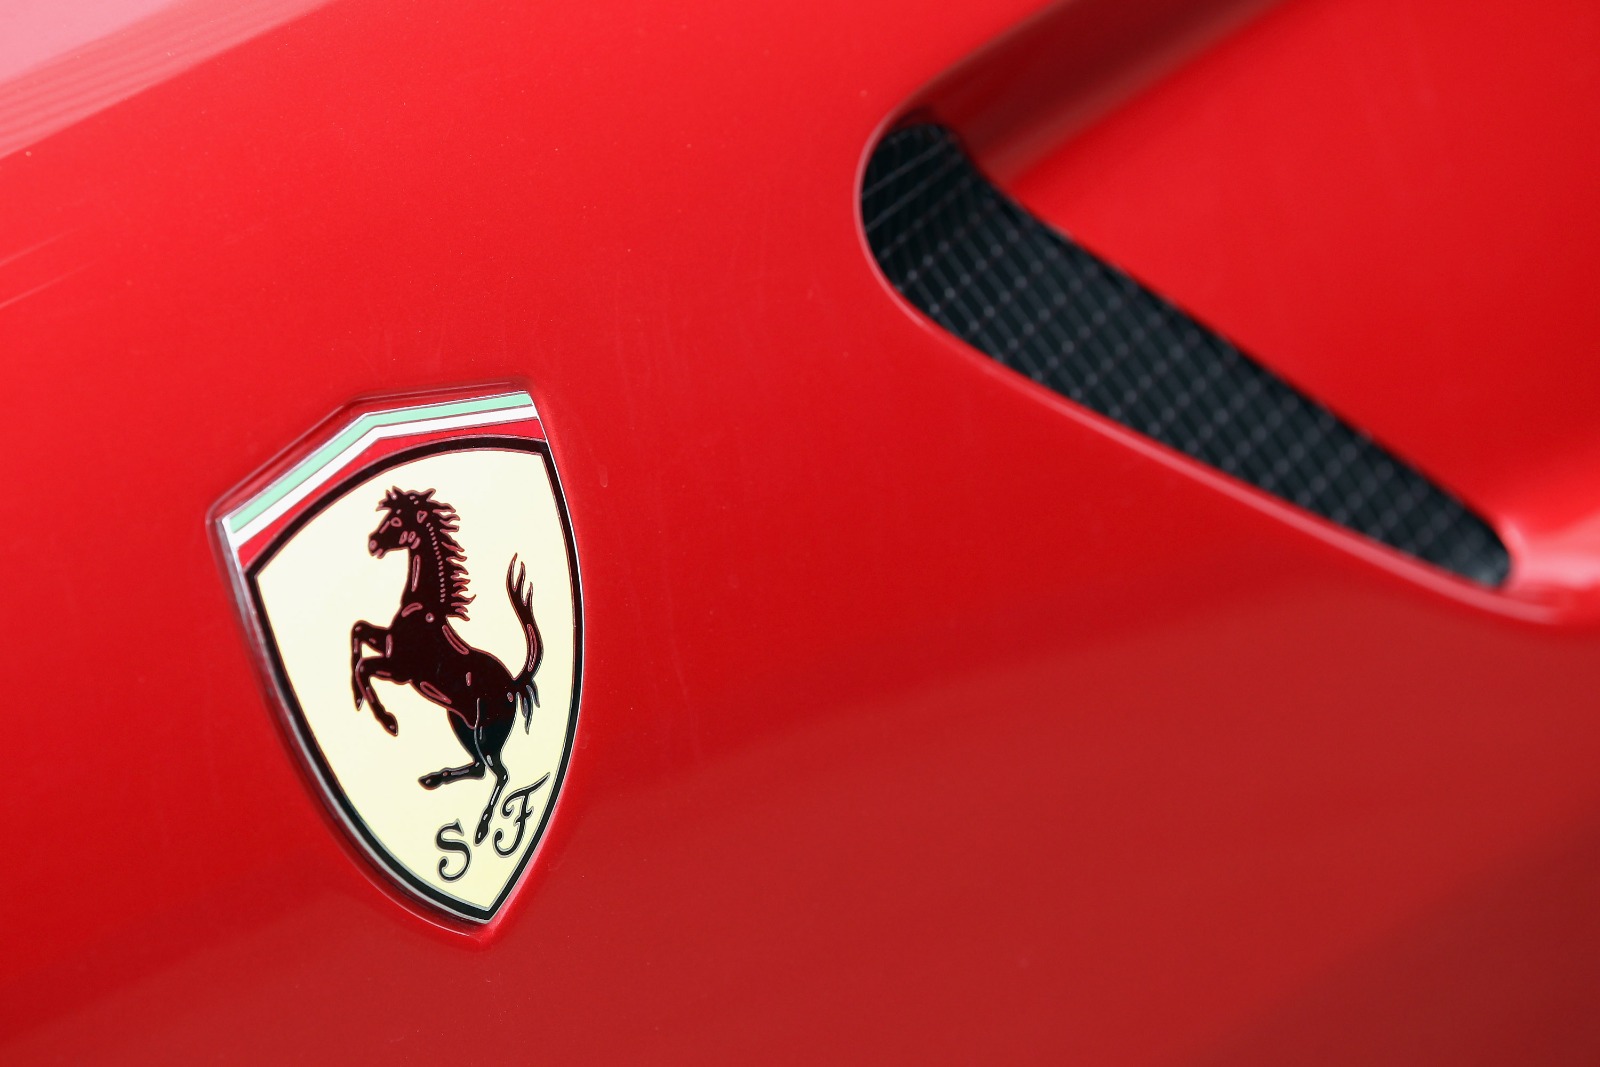 Valor de mercado da Ferrari cresce com rumores de acerto com Hamilton (Photo by Vittorio Zunino Celotto/Getty Images)